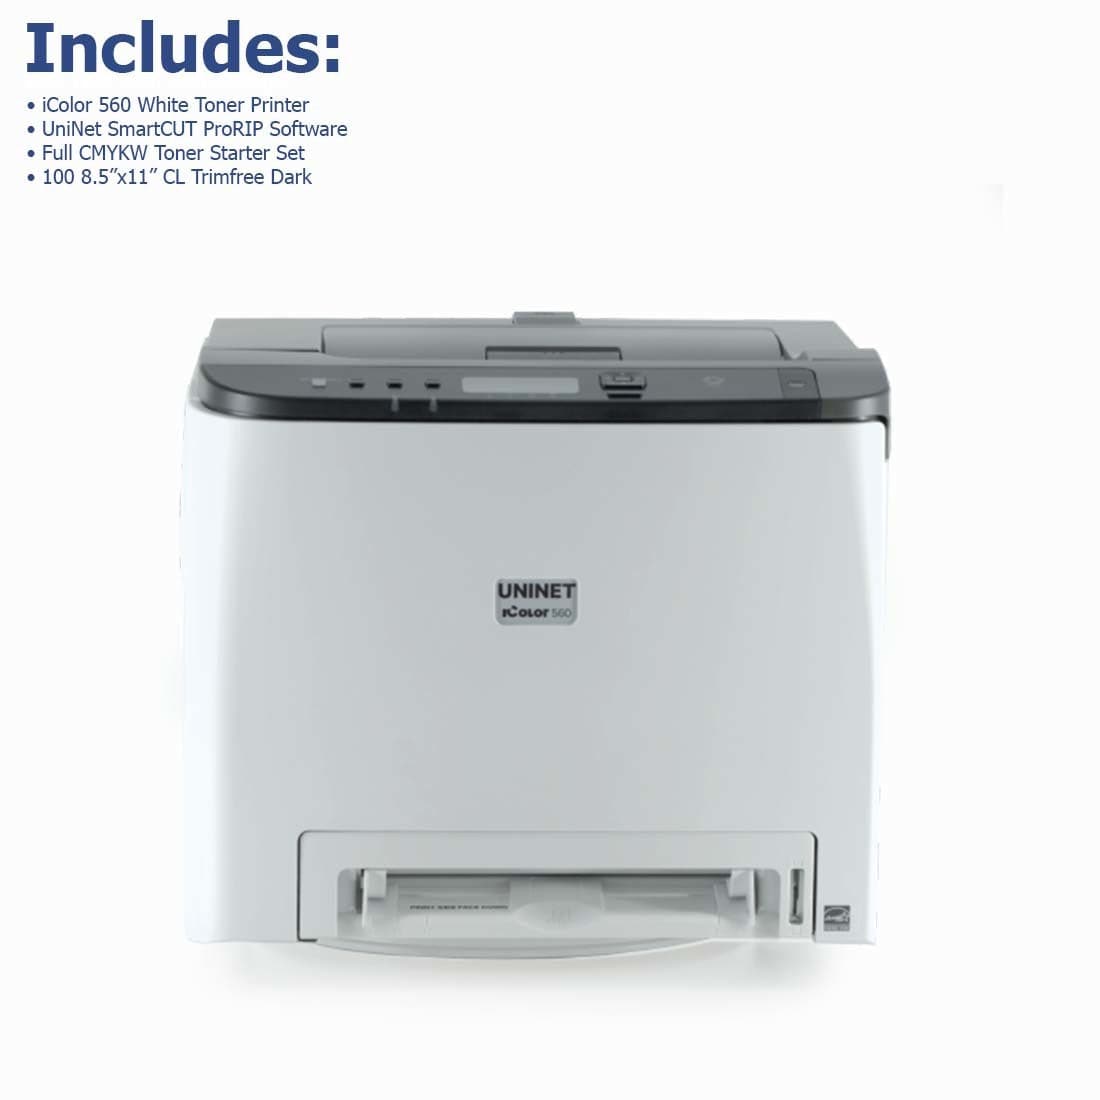 iColor 560 White Toner Printer - Joto Imaging Supplies US